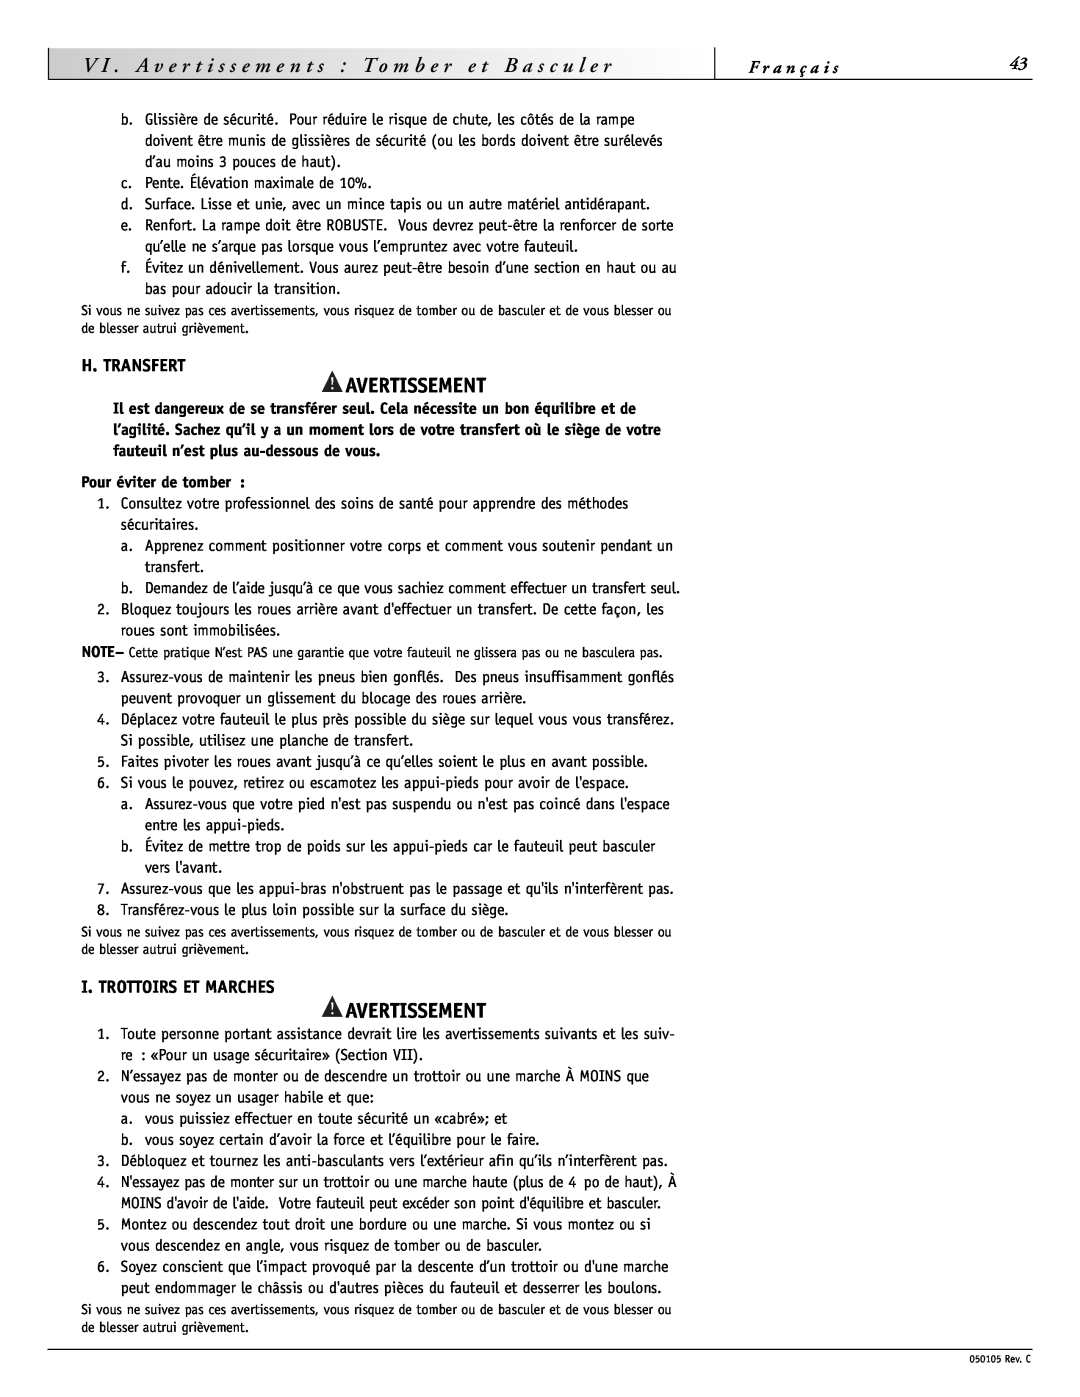 Sunrise Medical GT instruction manual H. Transfert, I. Trottoirs Et Marches, b e r, Avertissement, Pour éviter de tomber 